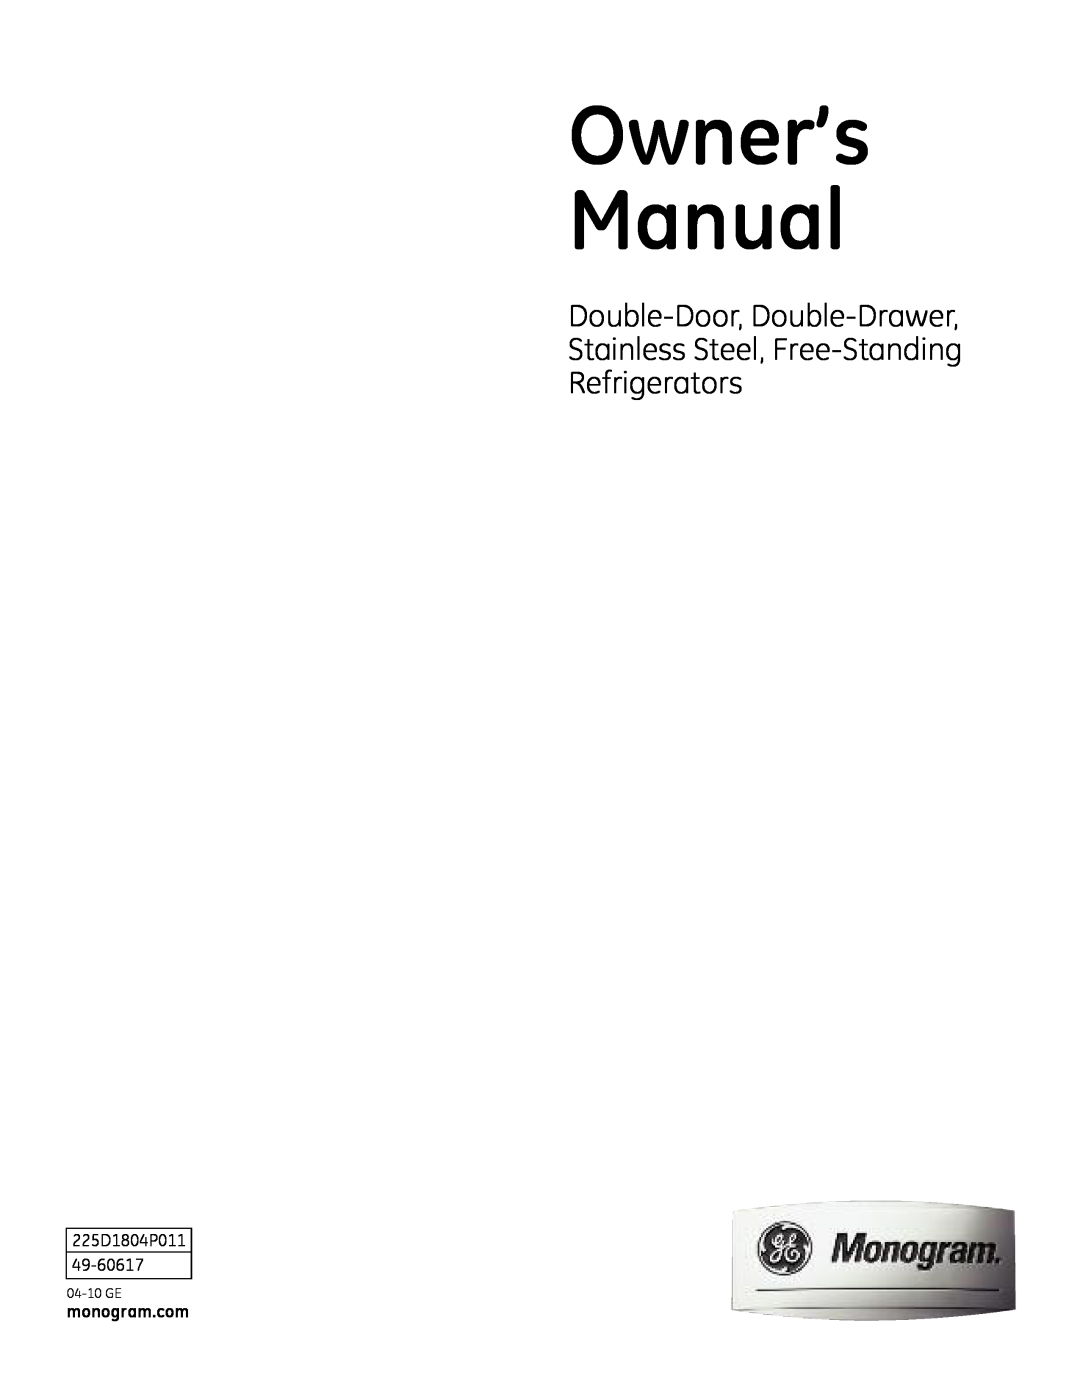 GE Monogram 225D1804P011 owner manual Owner’s Manual, Double-Door, Double-Drawer Stainless Steel, Free-Standing, 04-10 GE 